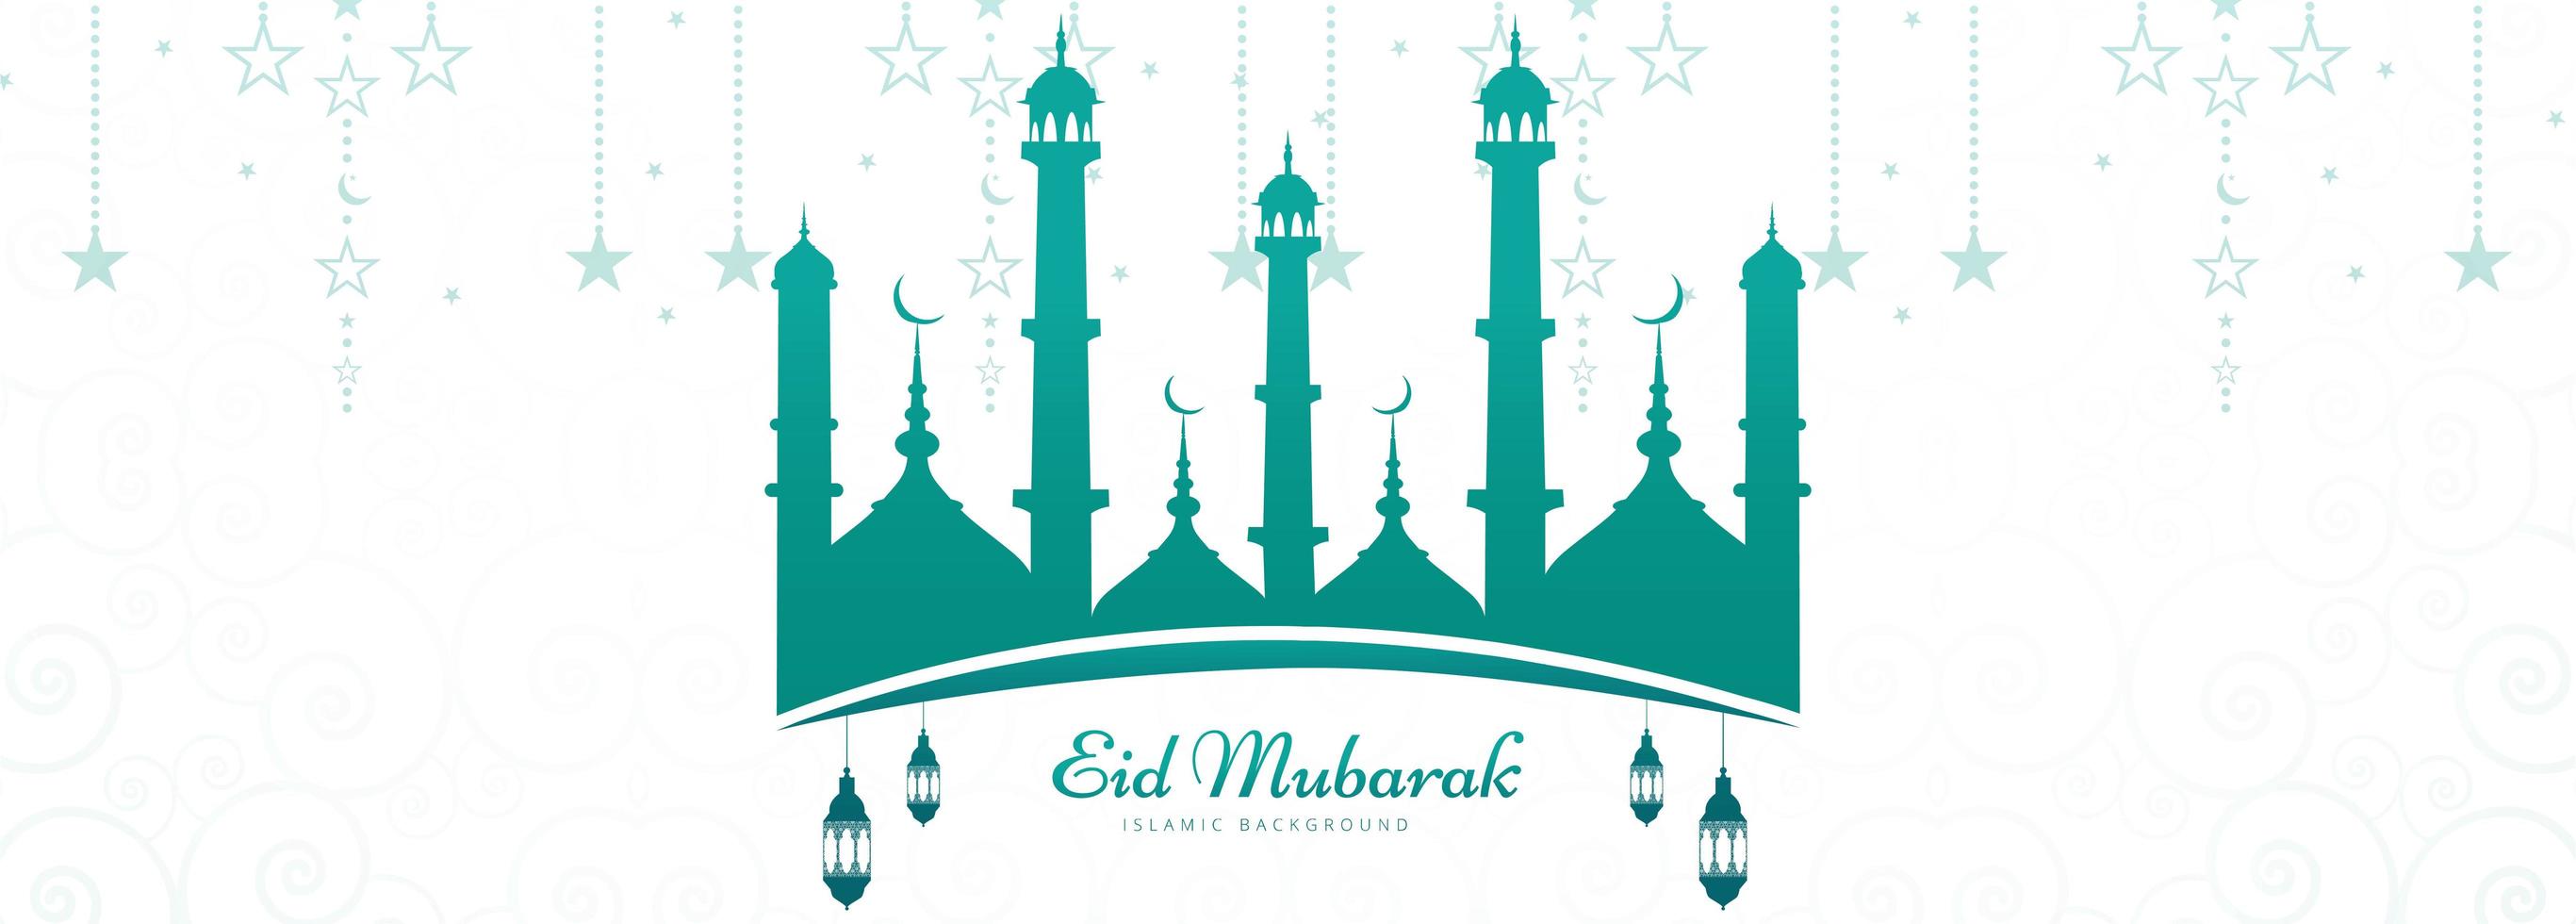 Eid mubarak card banner with teal mosque  vector